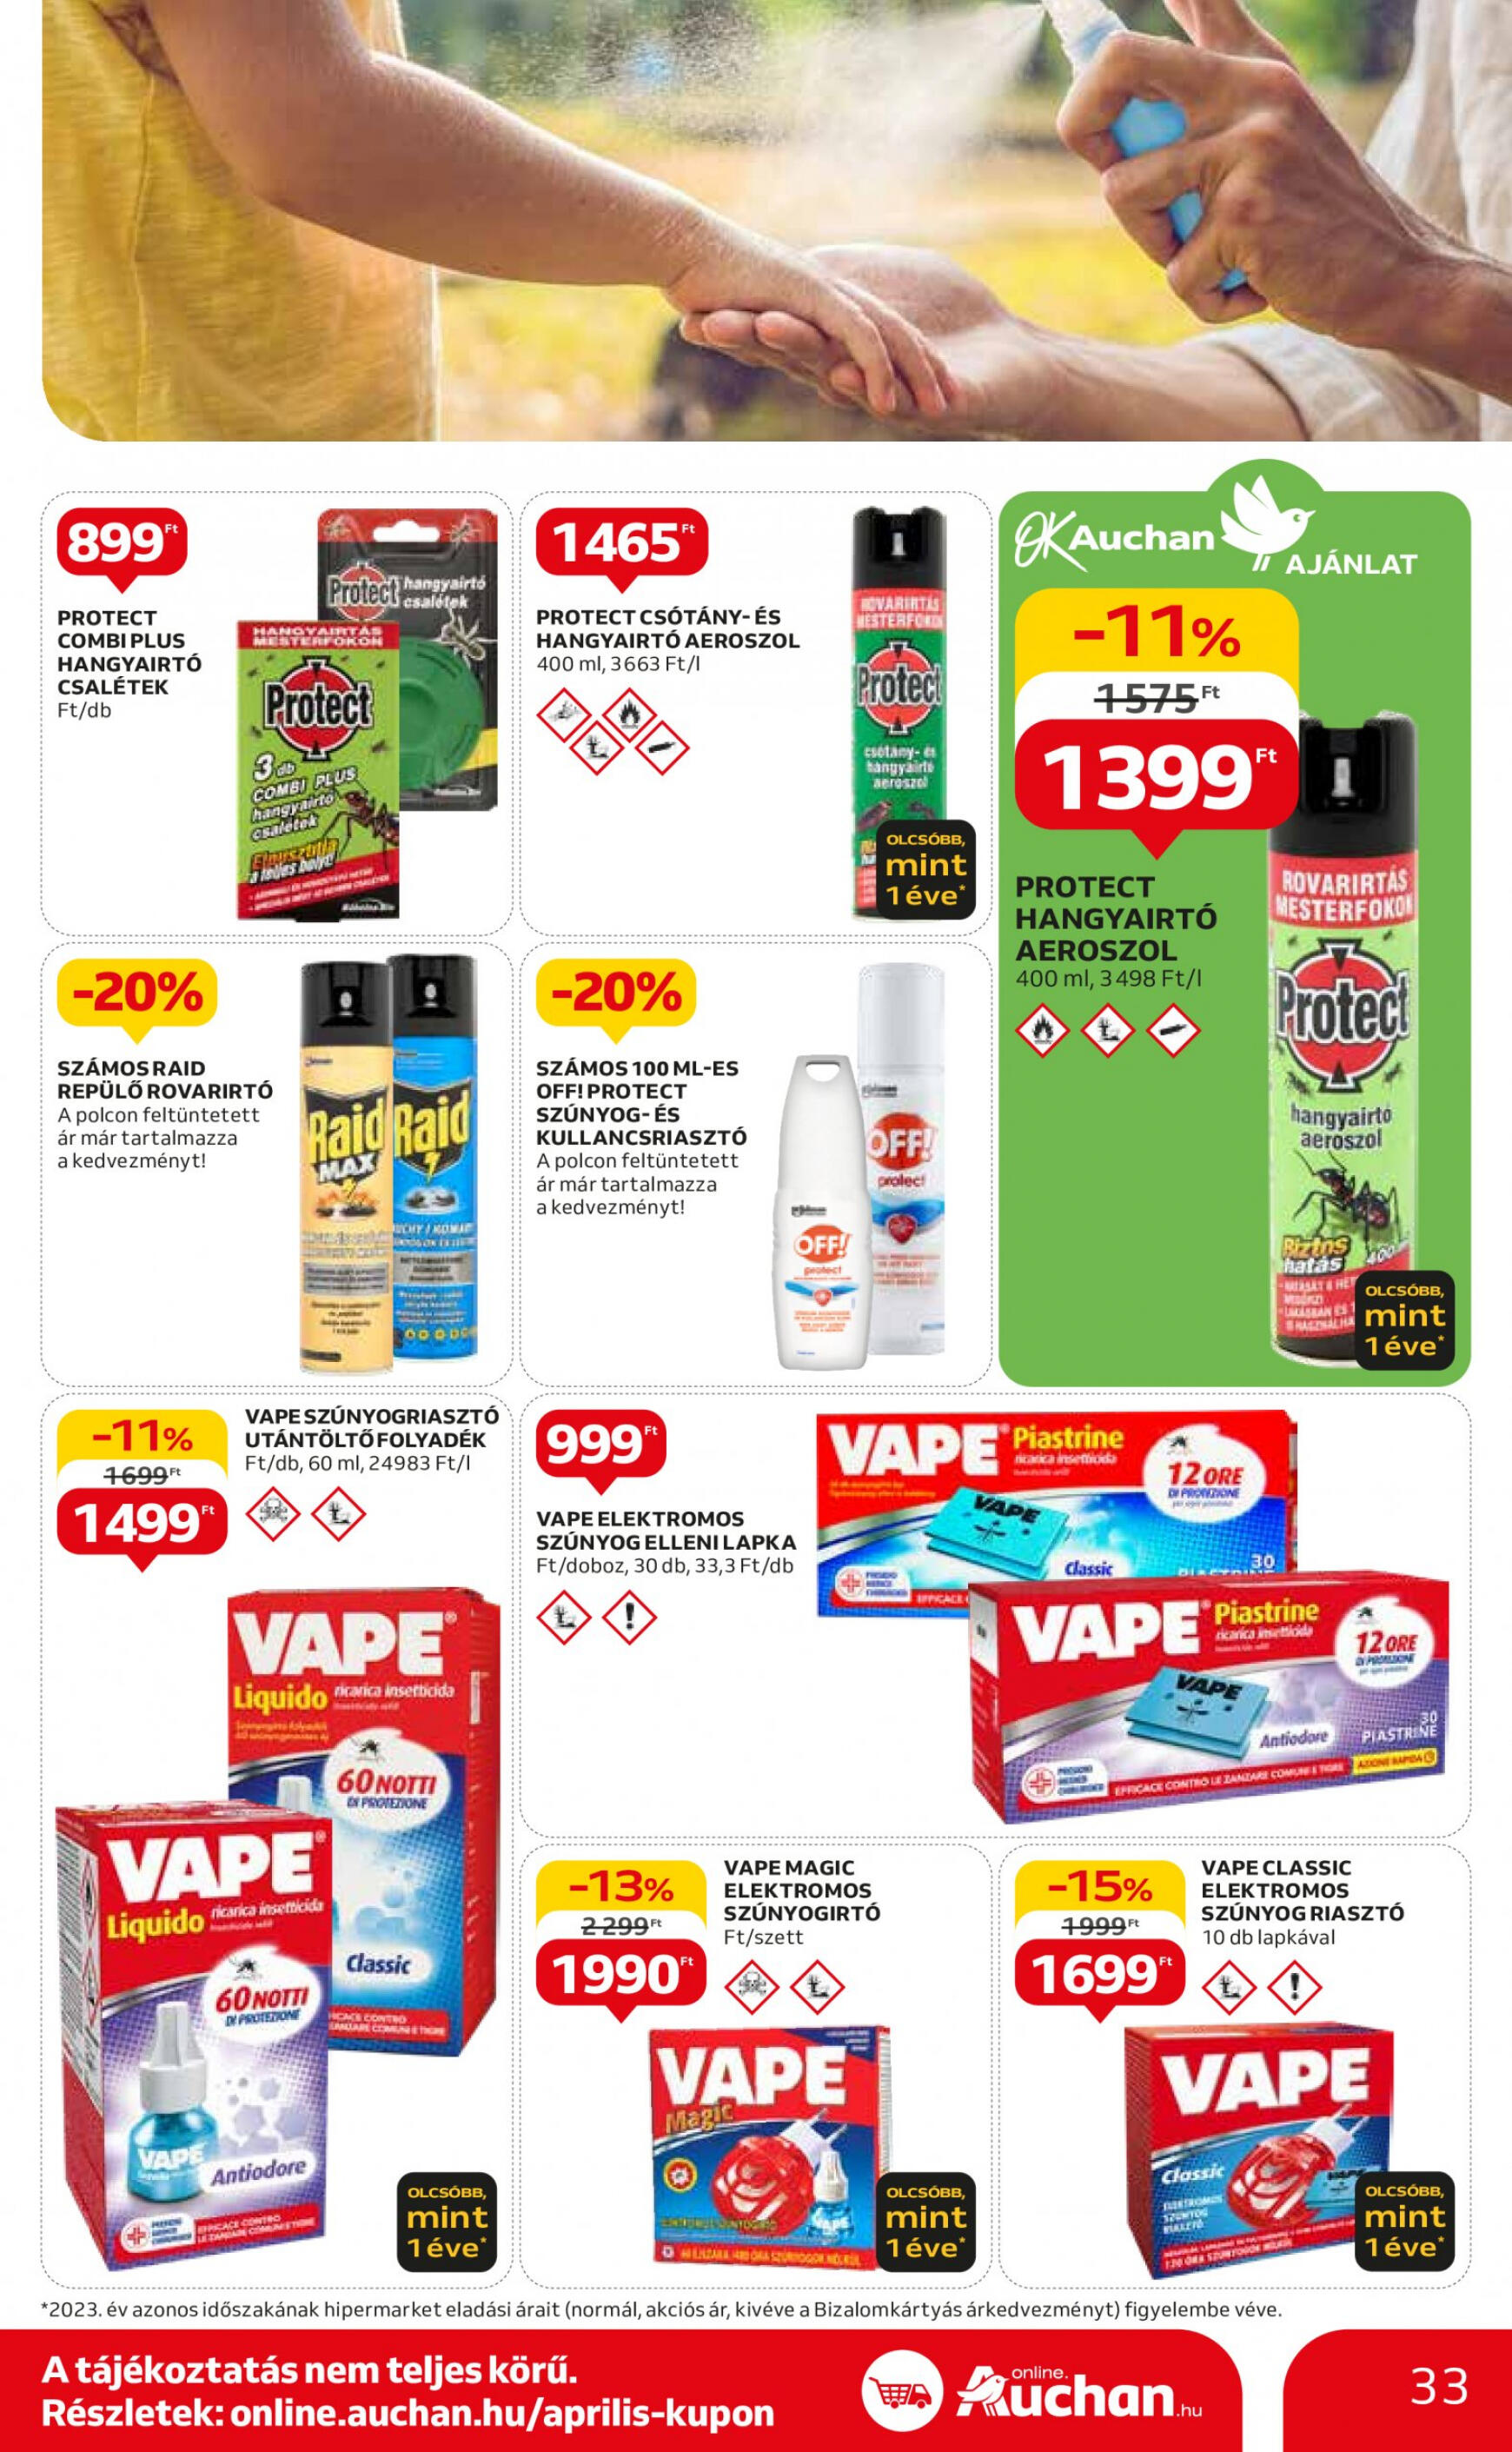 auchan - Aktuális újság Auchan 04.25. - 04.30. - page: 33